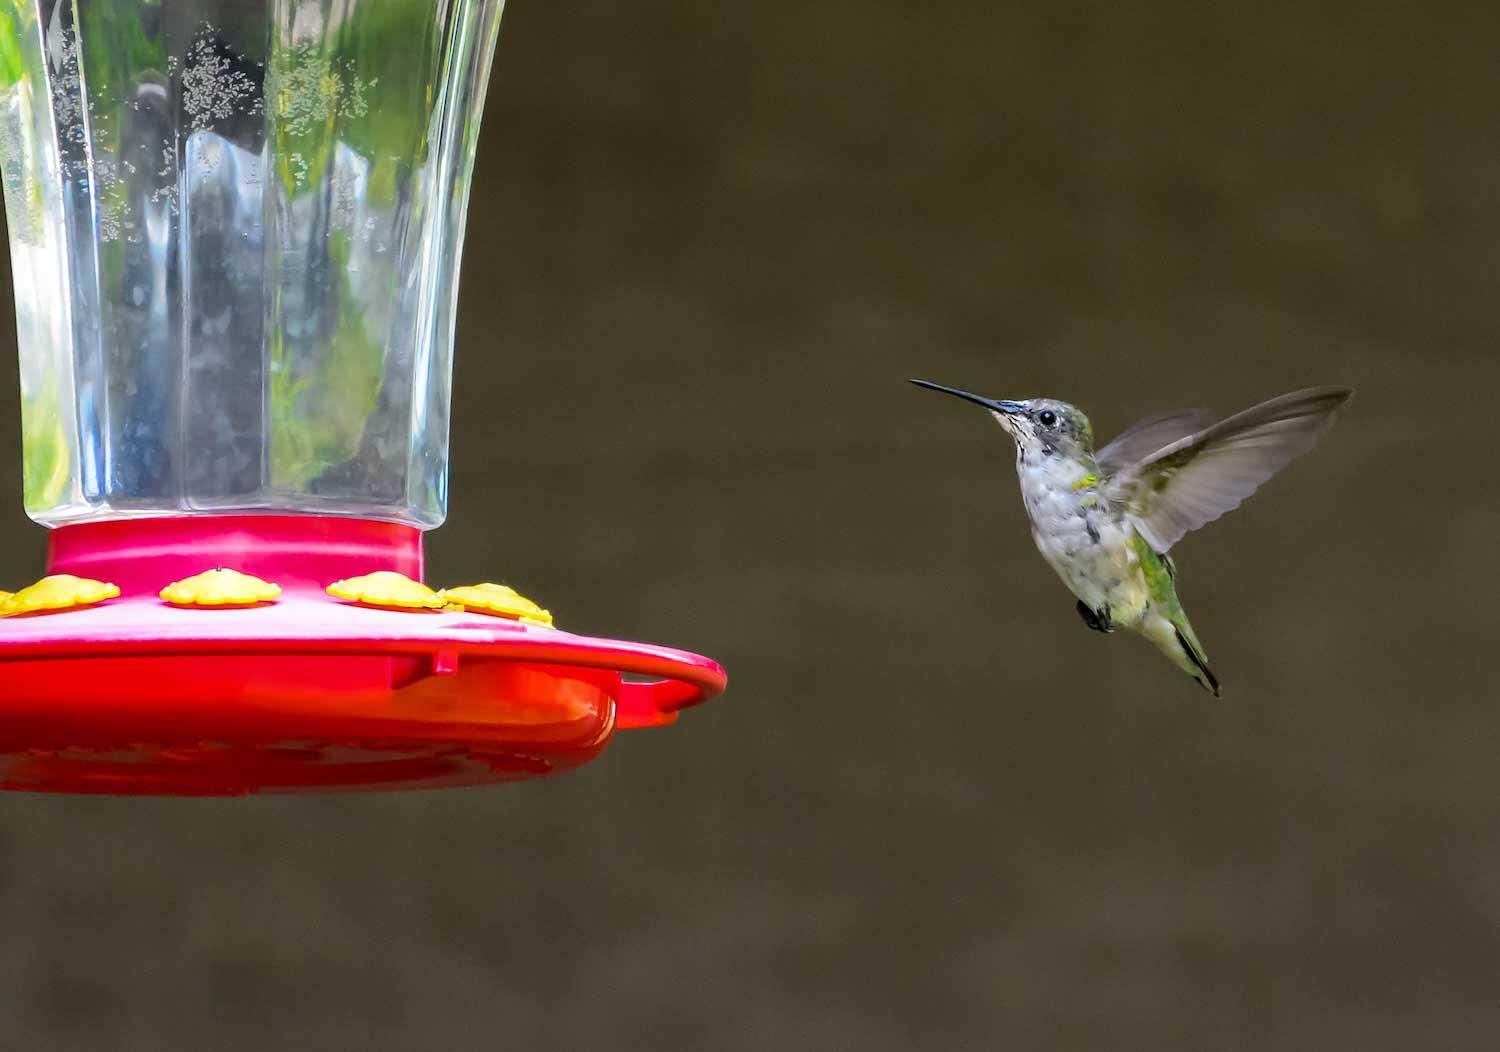 A ruby-throated hummingbird approaching a hummingbird feeder.